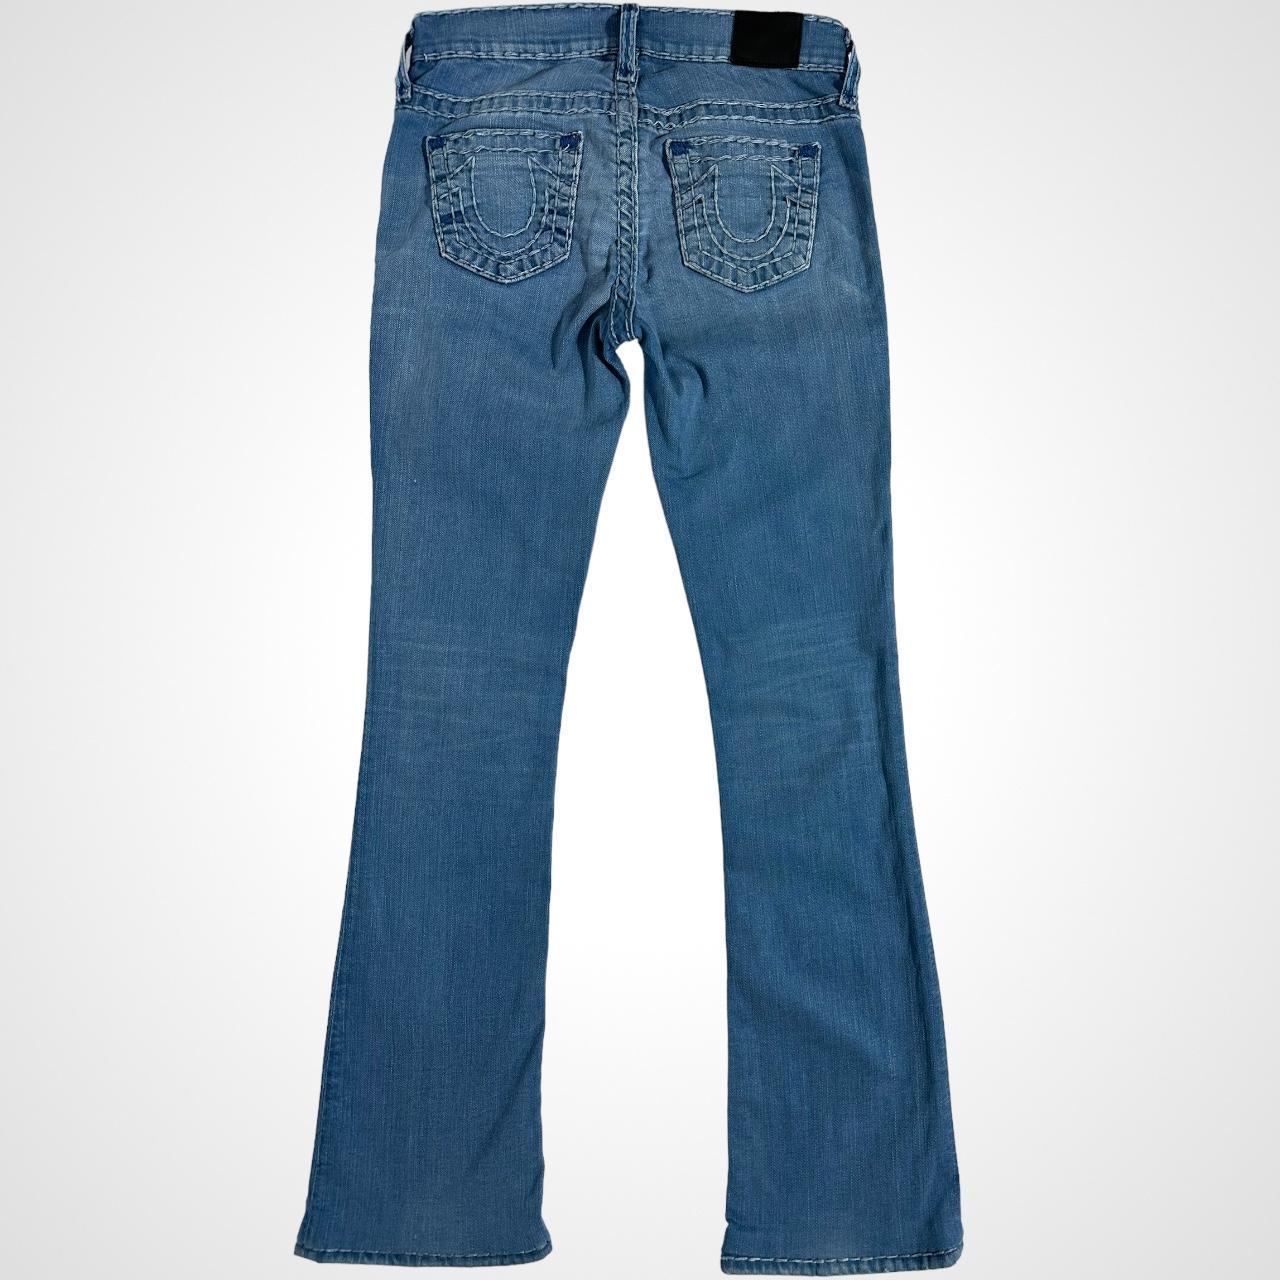 XS Y2K Dark Wash Low Rise Bootcut Jeans Vintage Stretchy Denim 2000s Jeans  